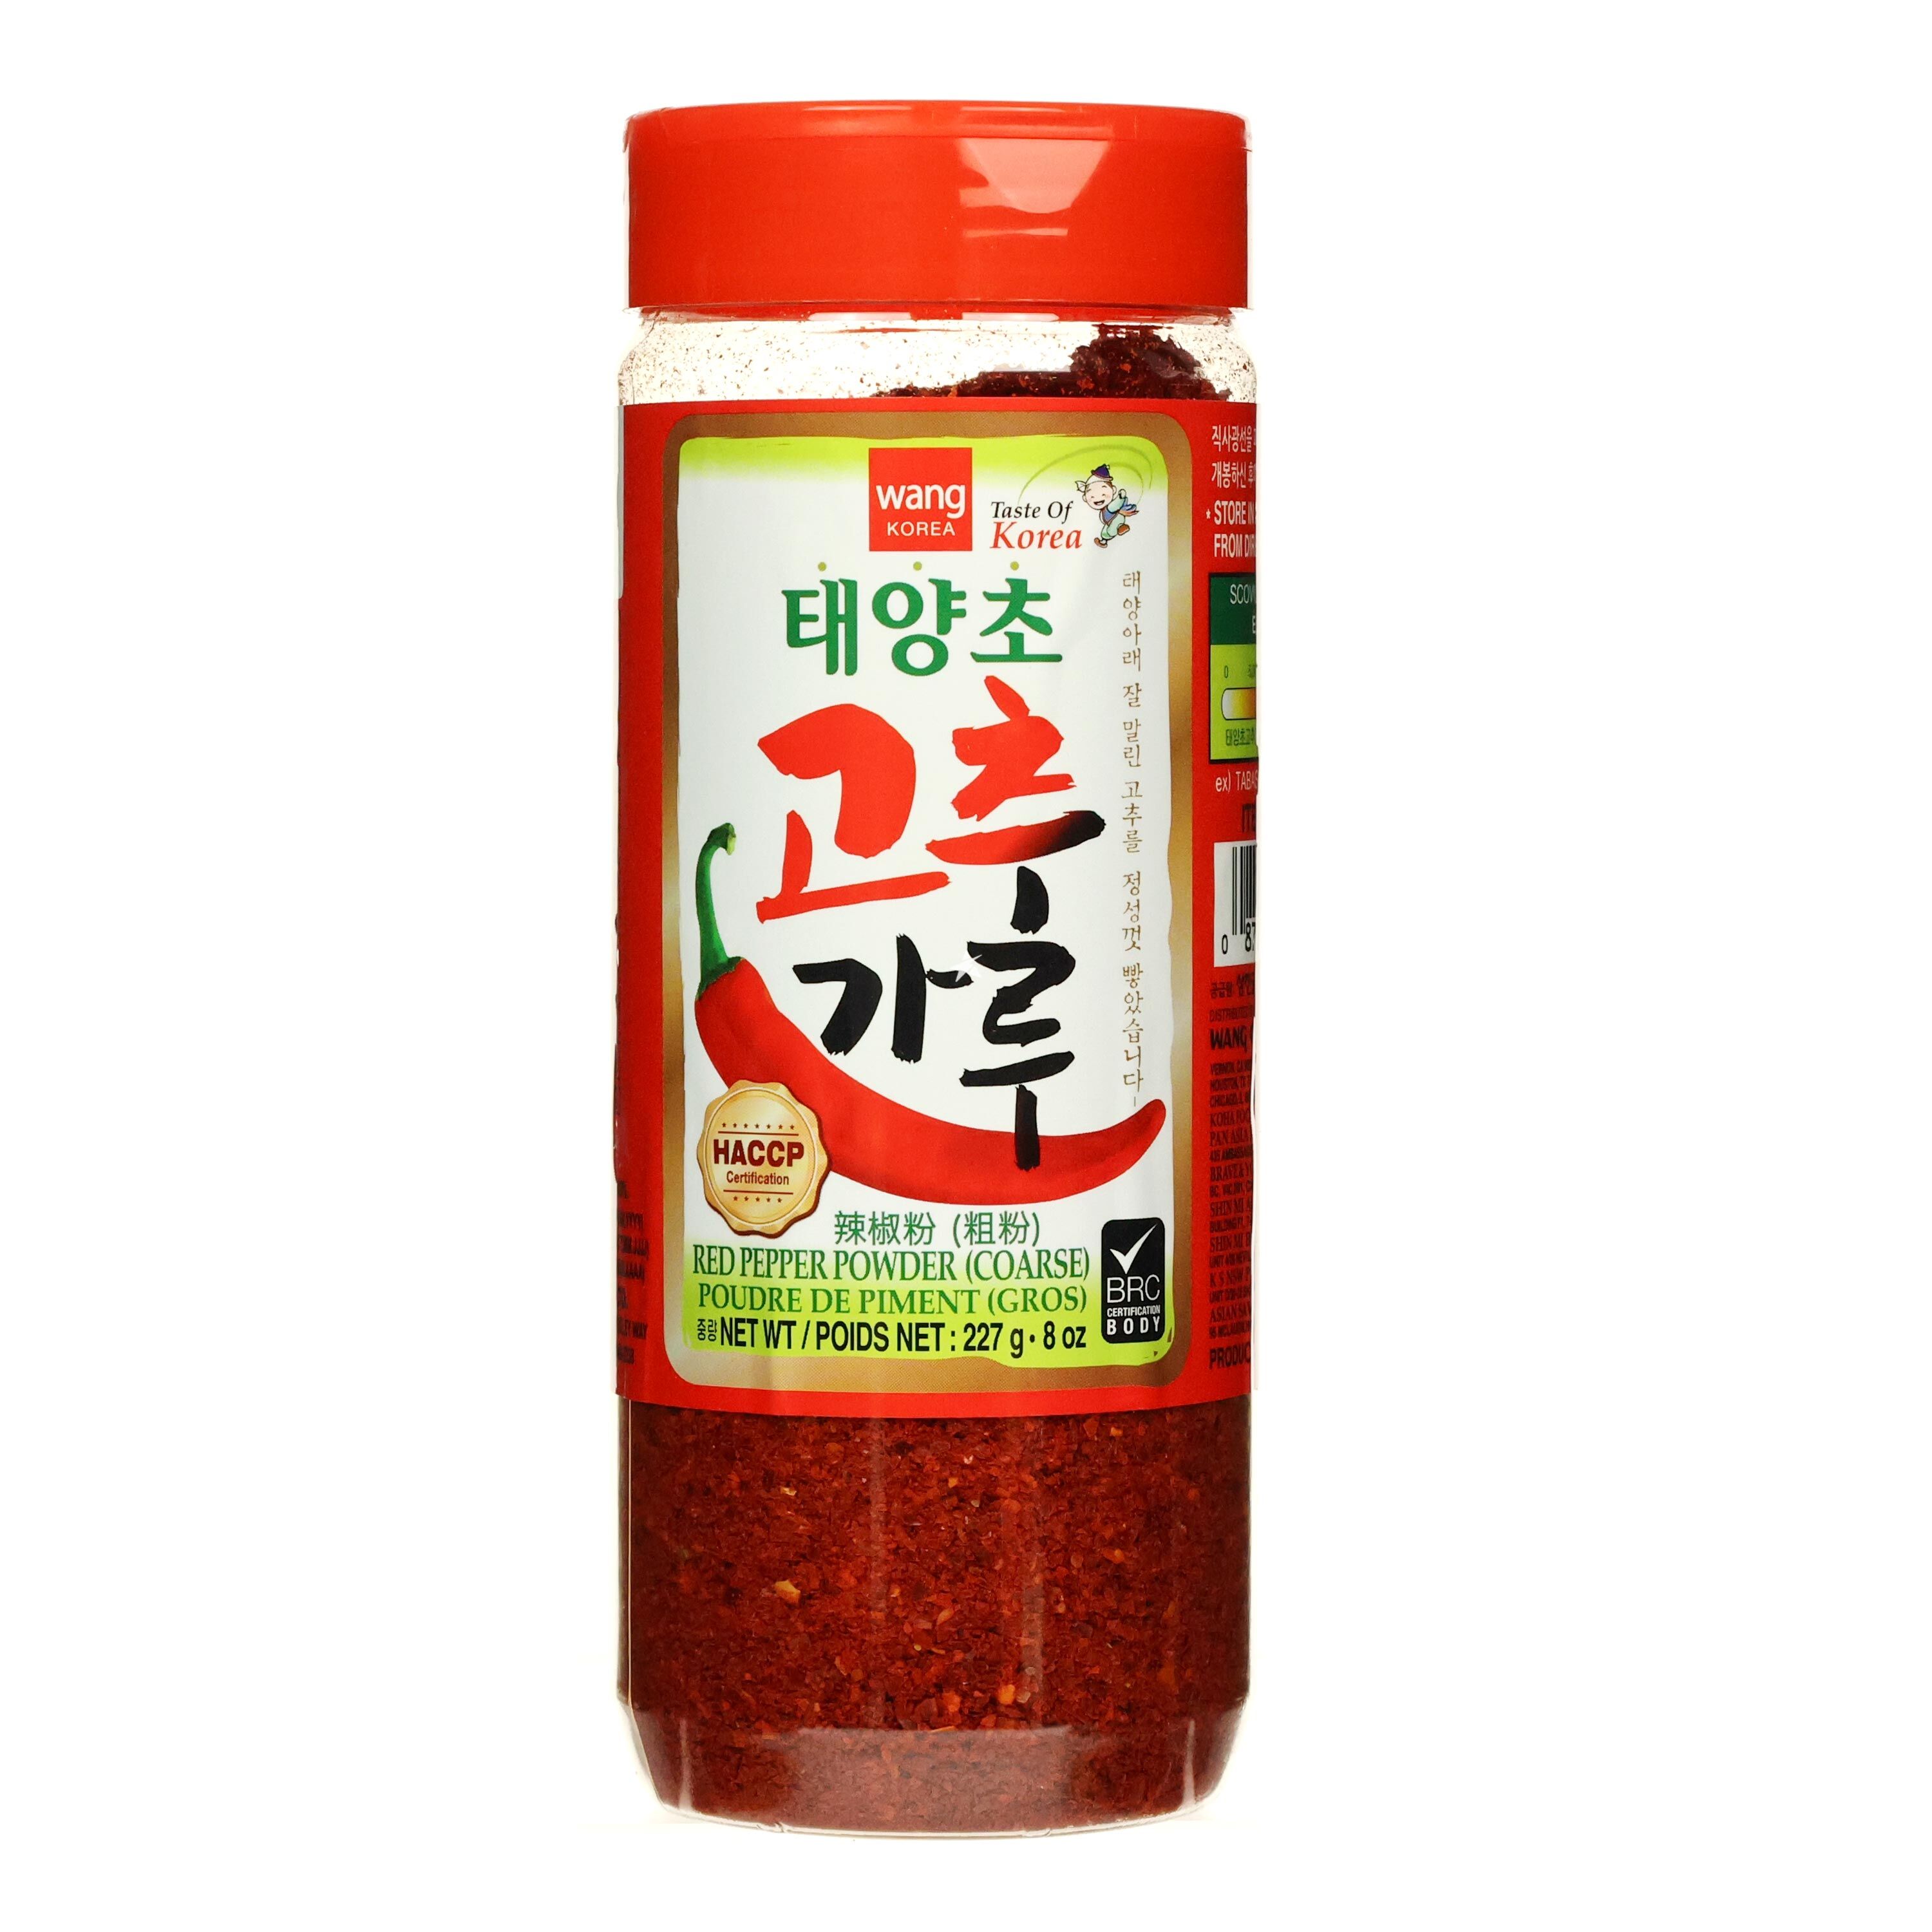 Wang - Red Pepper Powder (Fine Gochugaru) (韓國紅椒粉) - Wai Yee Hong